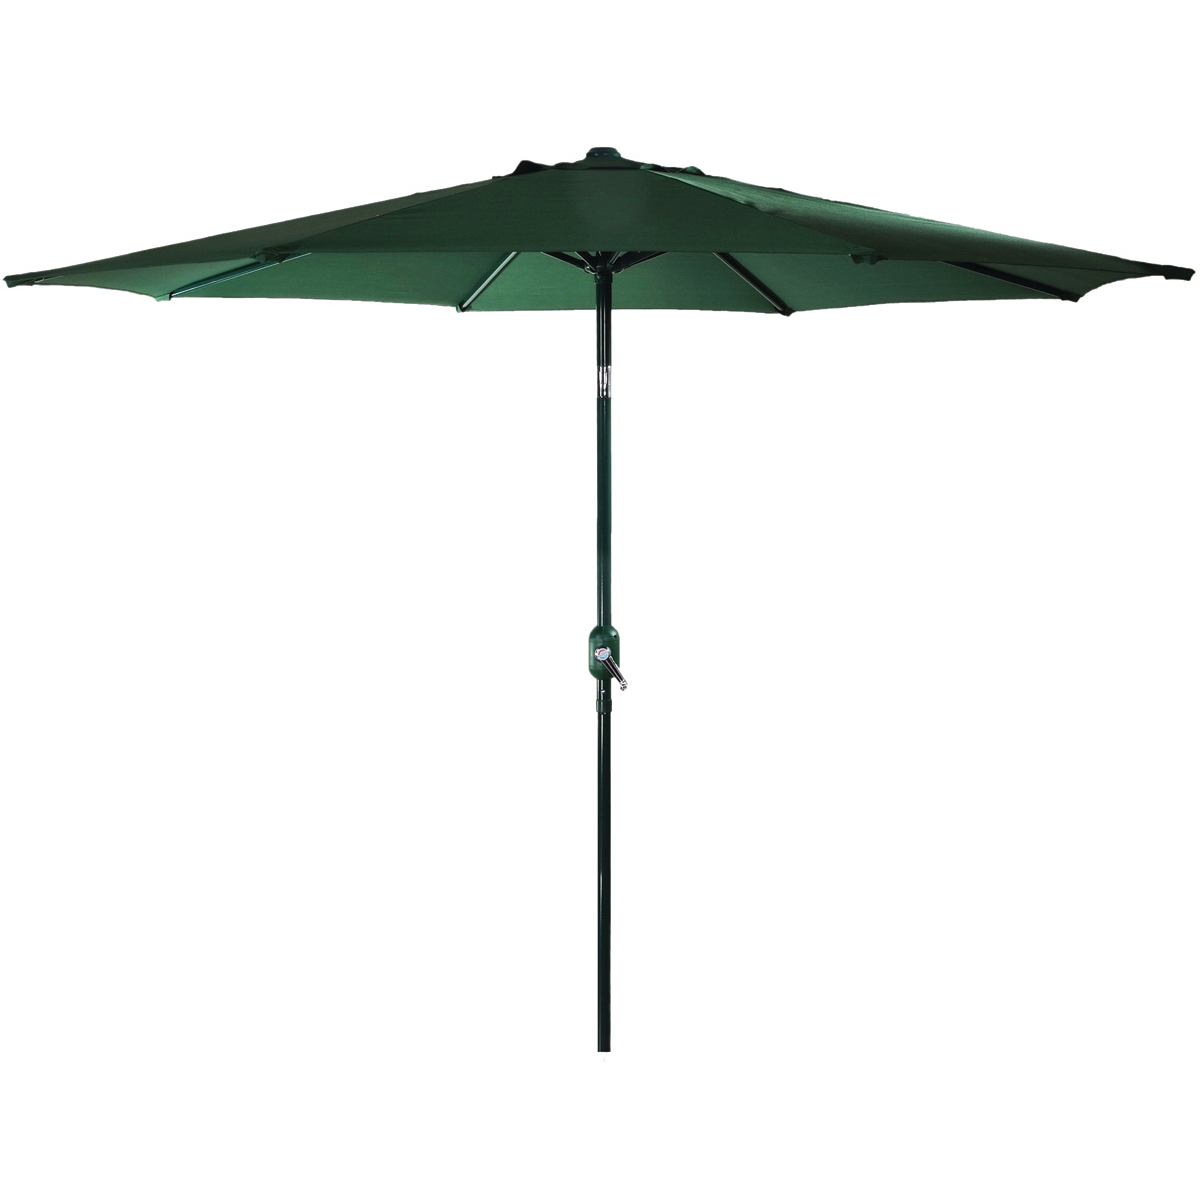 60035 Crank Umbrella, 92.9 in H, 107.9 in W Canopy, 107.9 in L Canopy, Round Canopy, Steel Frame